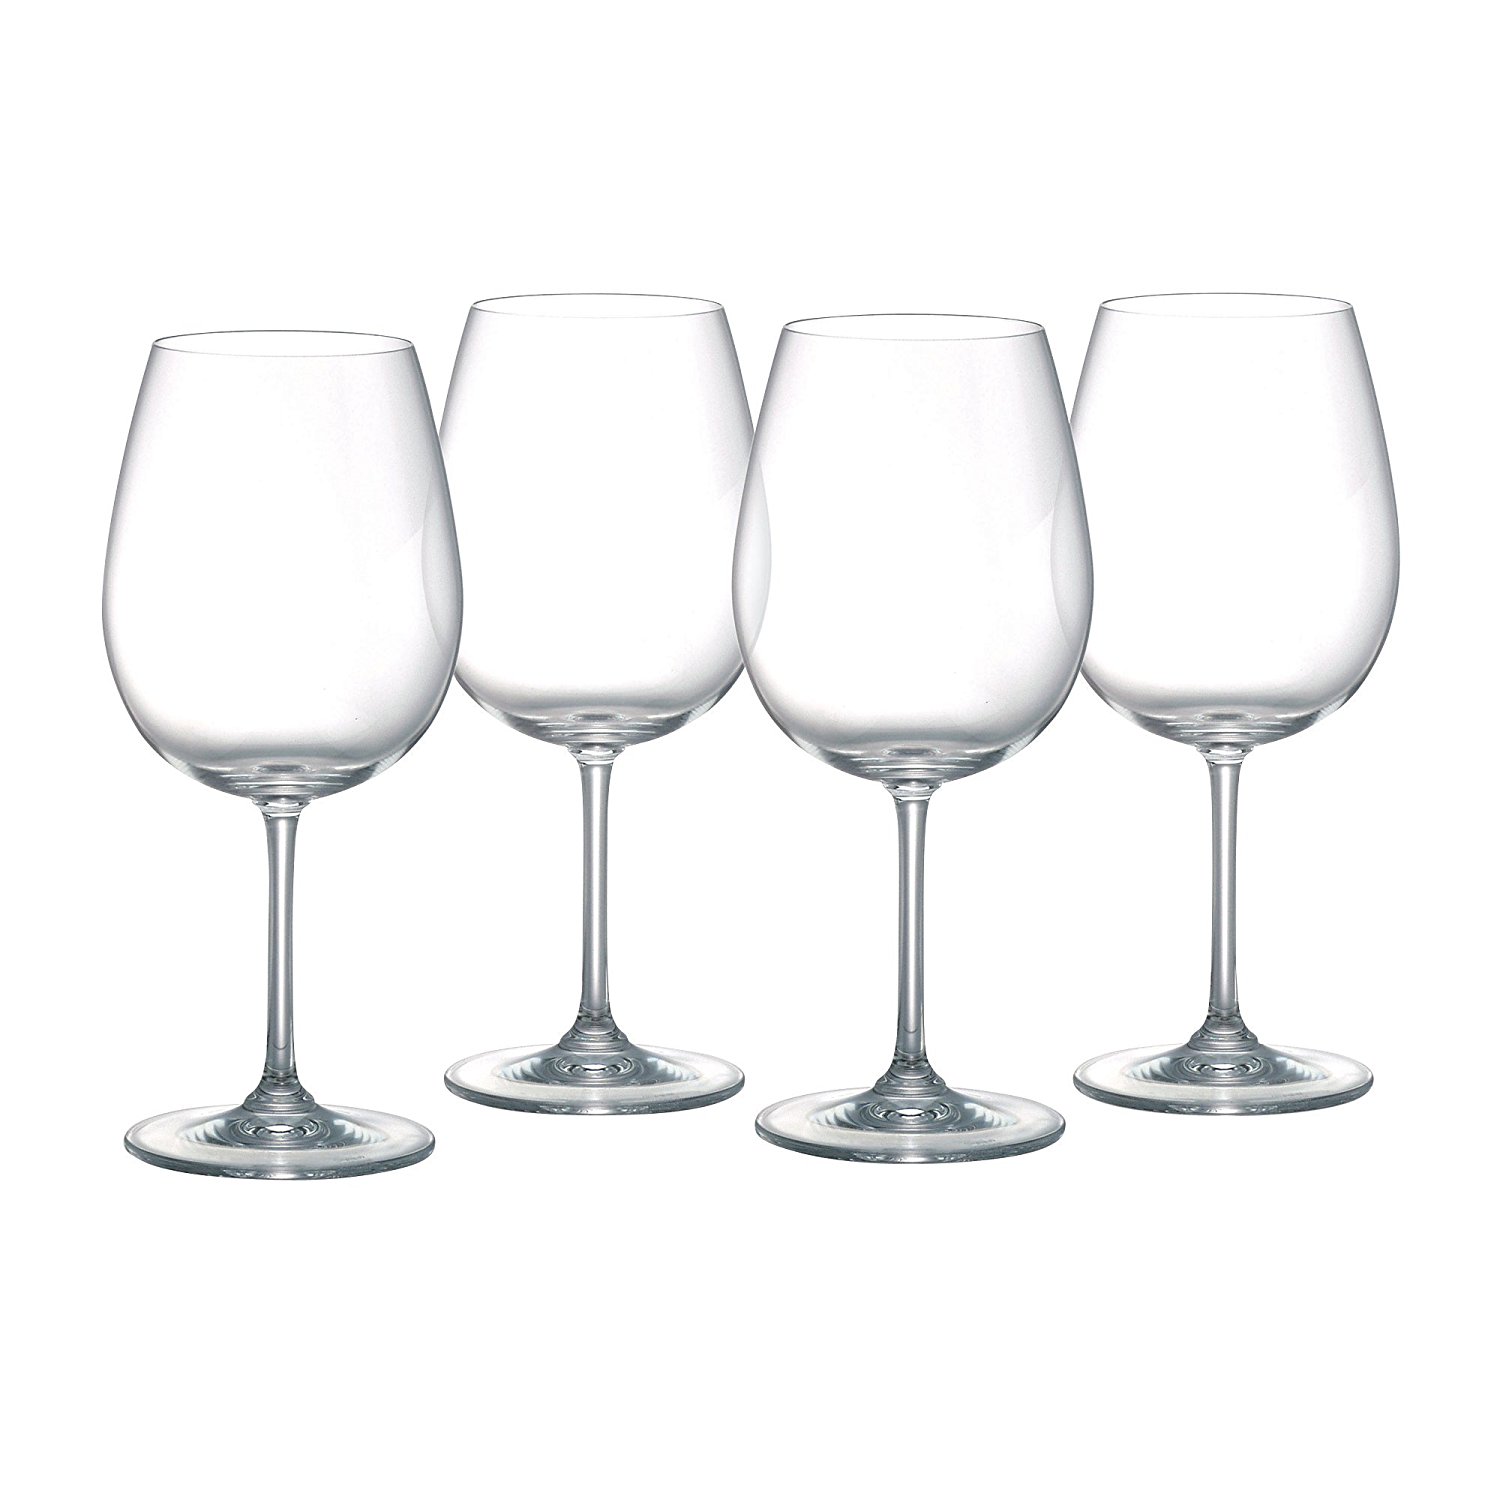 AtoZ Pack of 6 - Wine Glasses